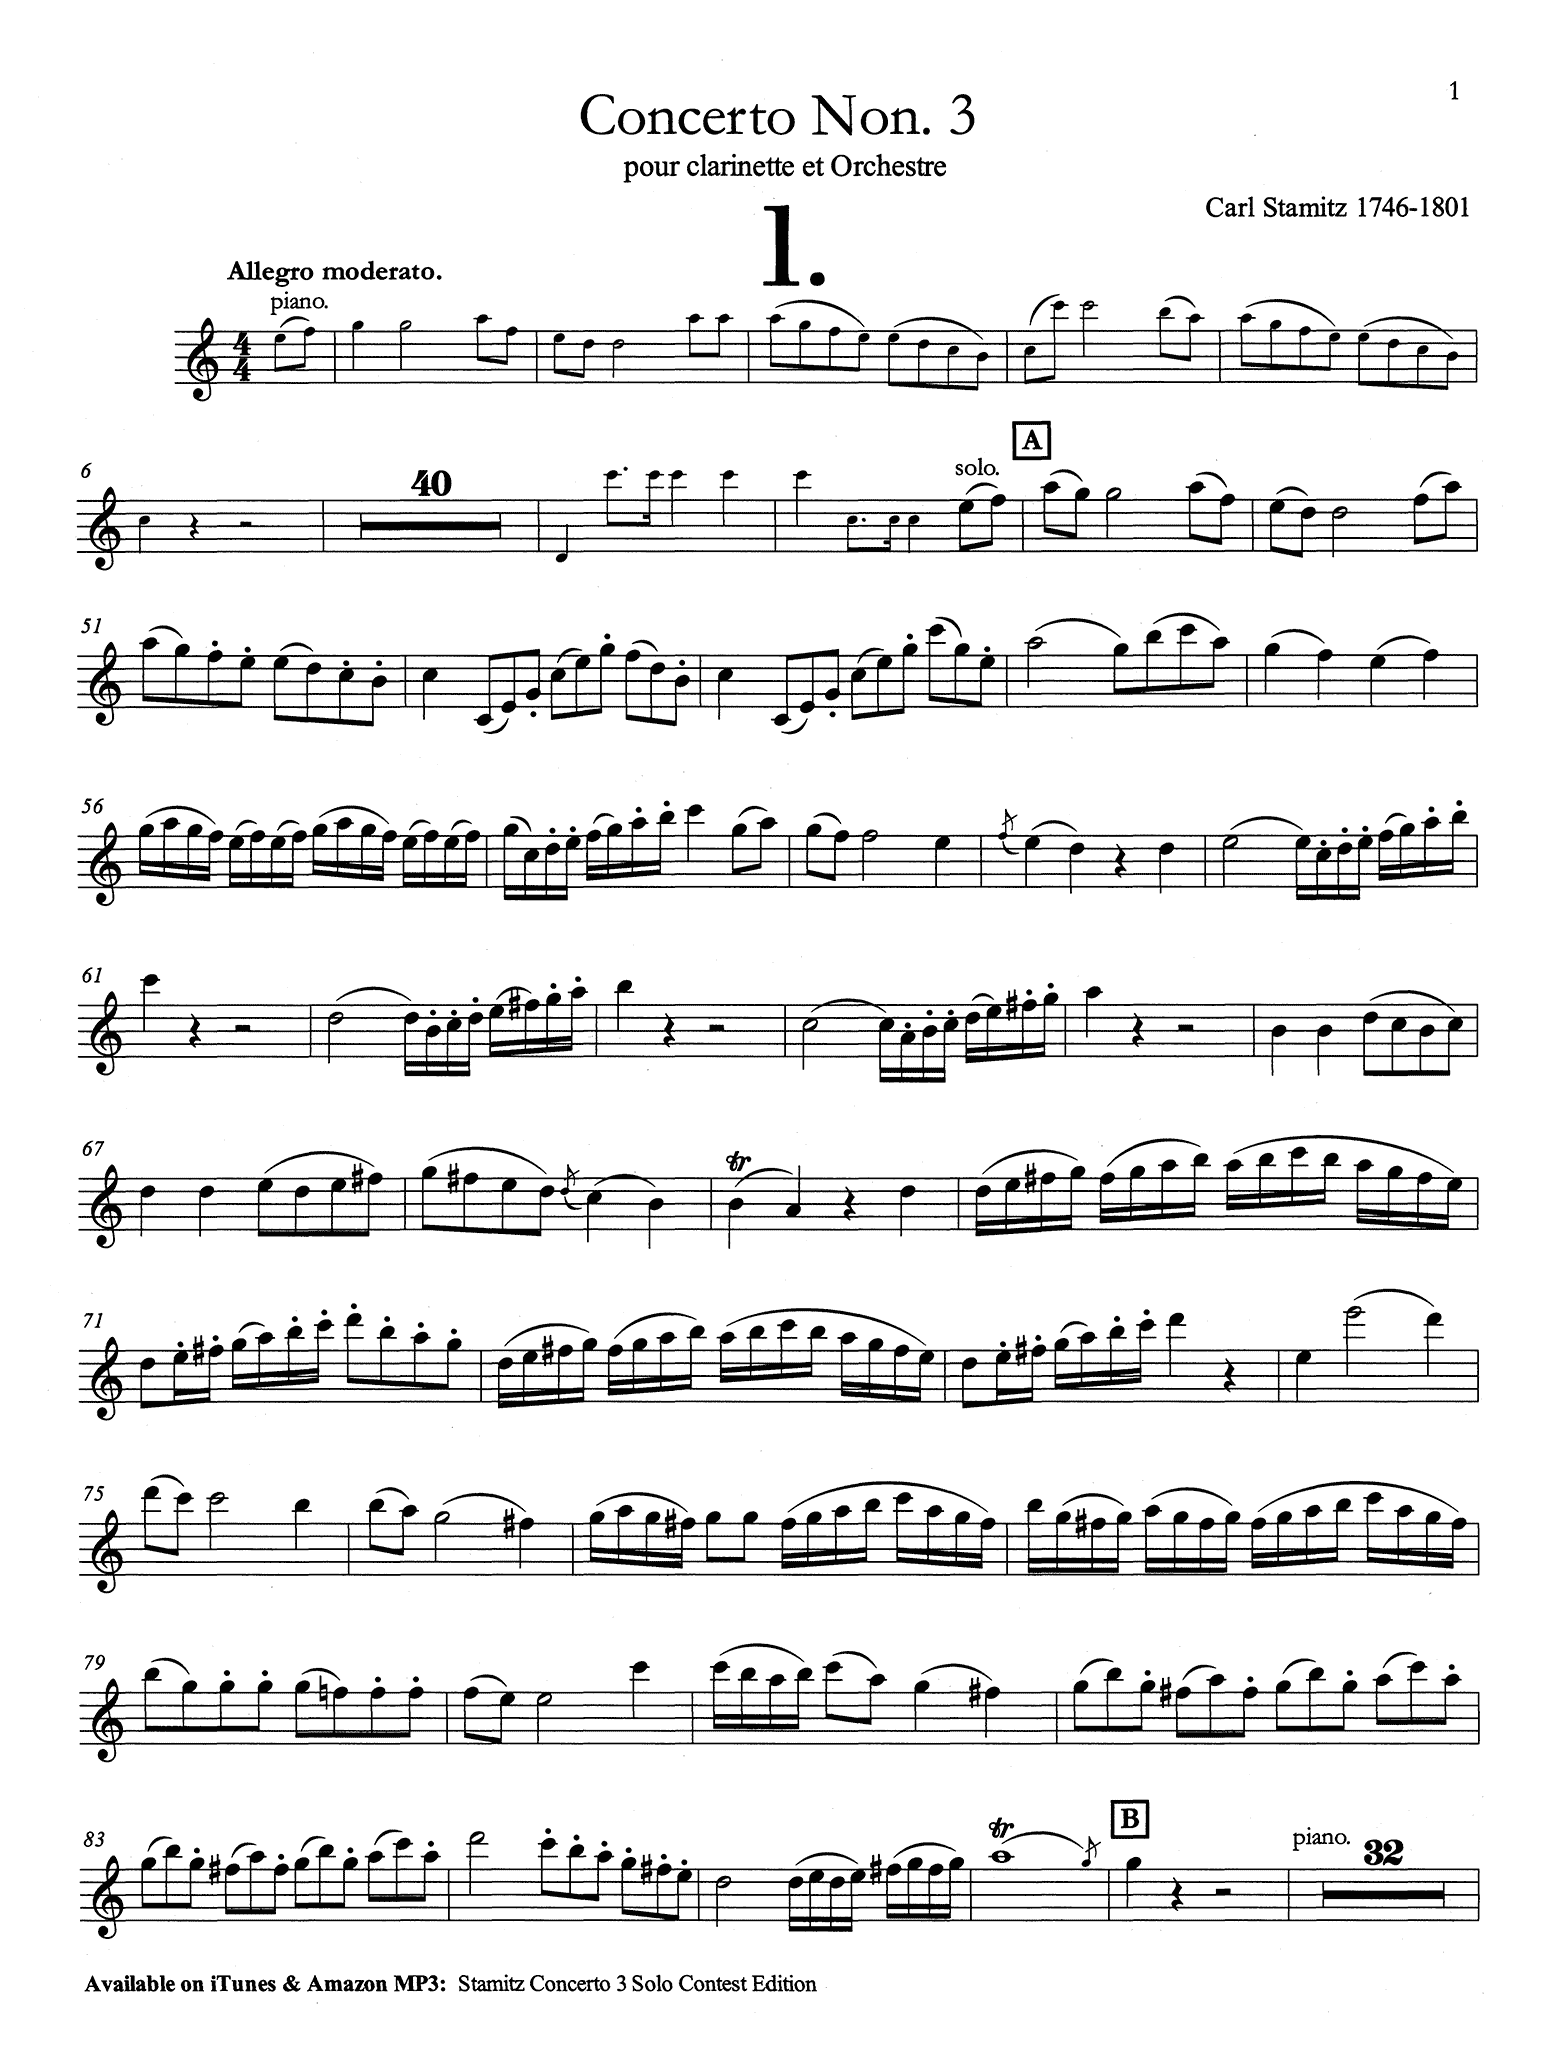 Stamitz Concerto No. 3 clarinet part